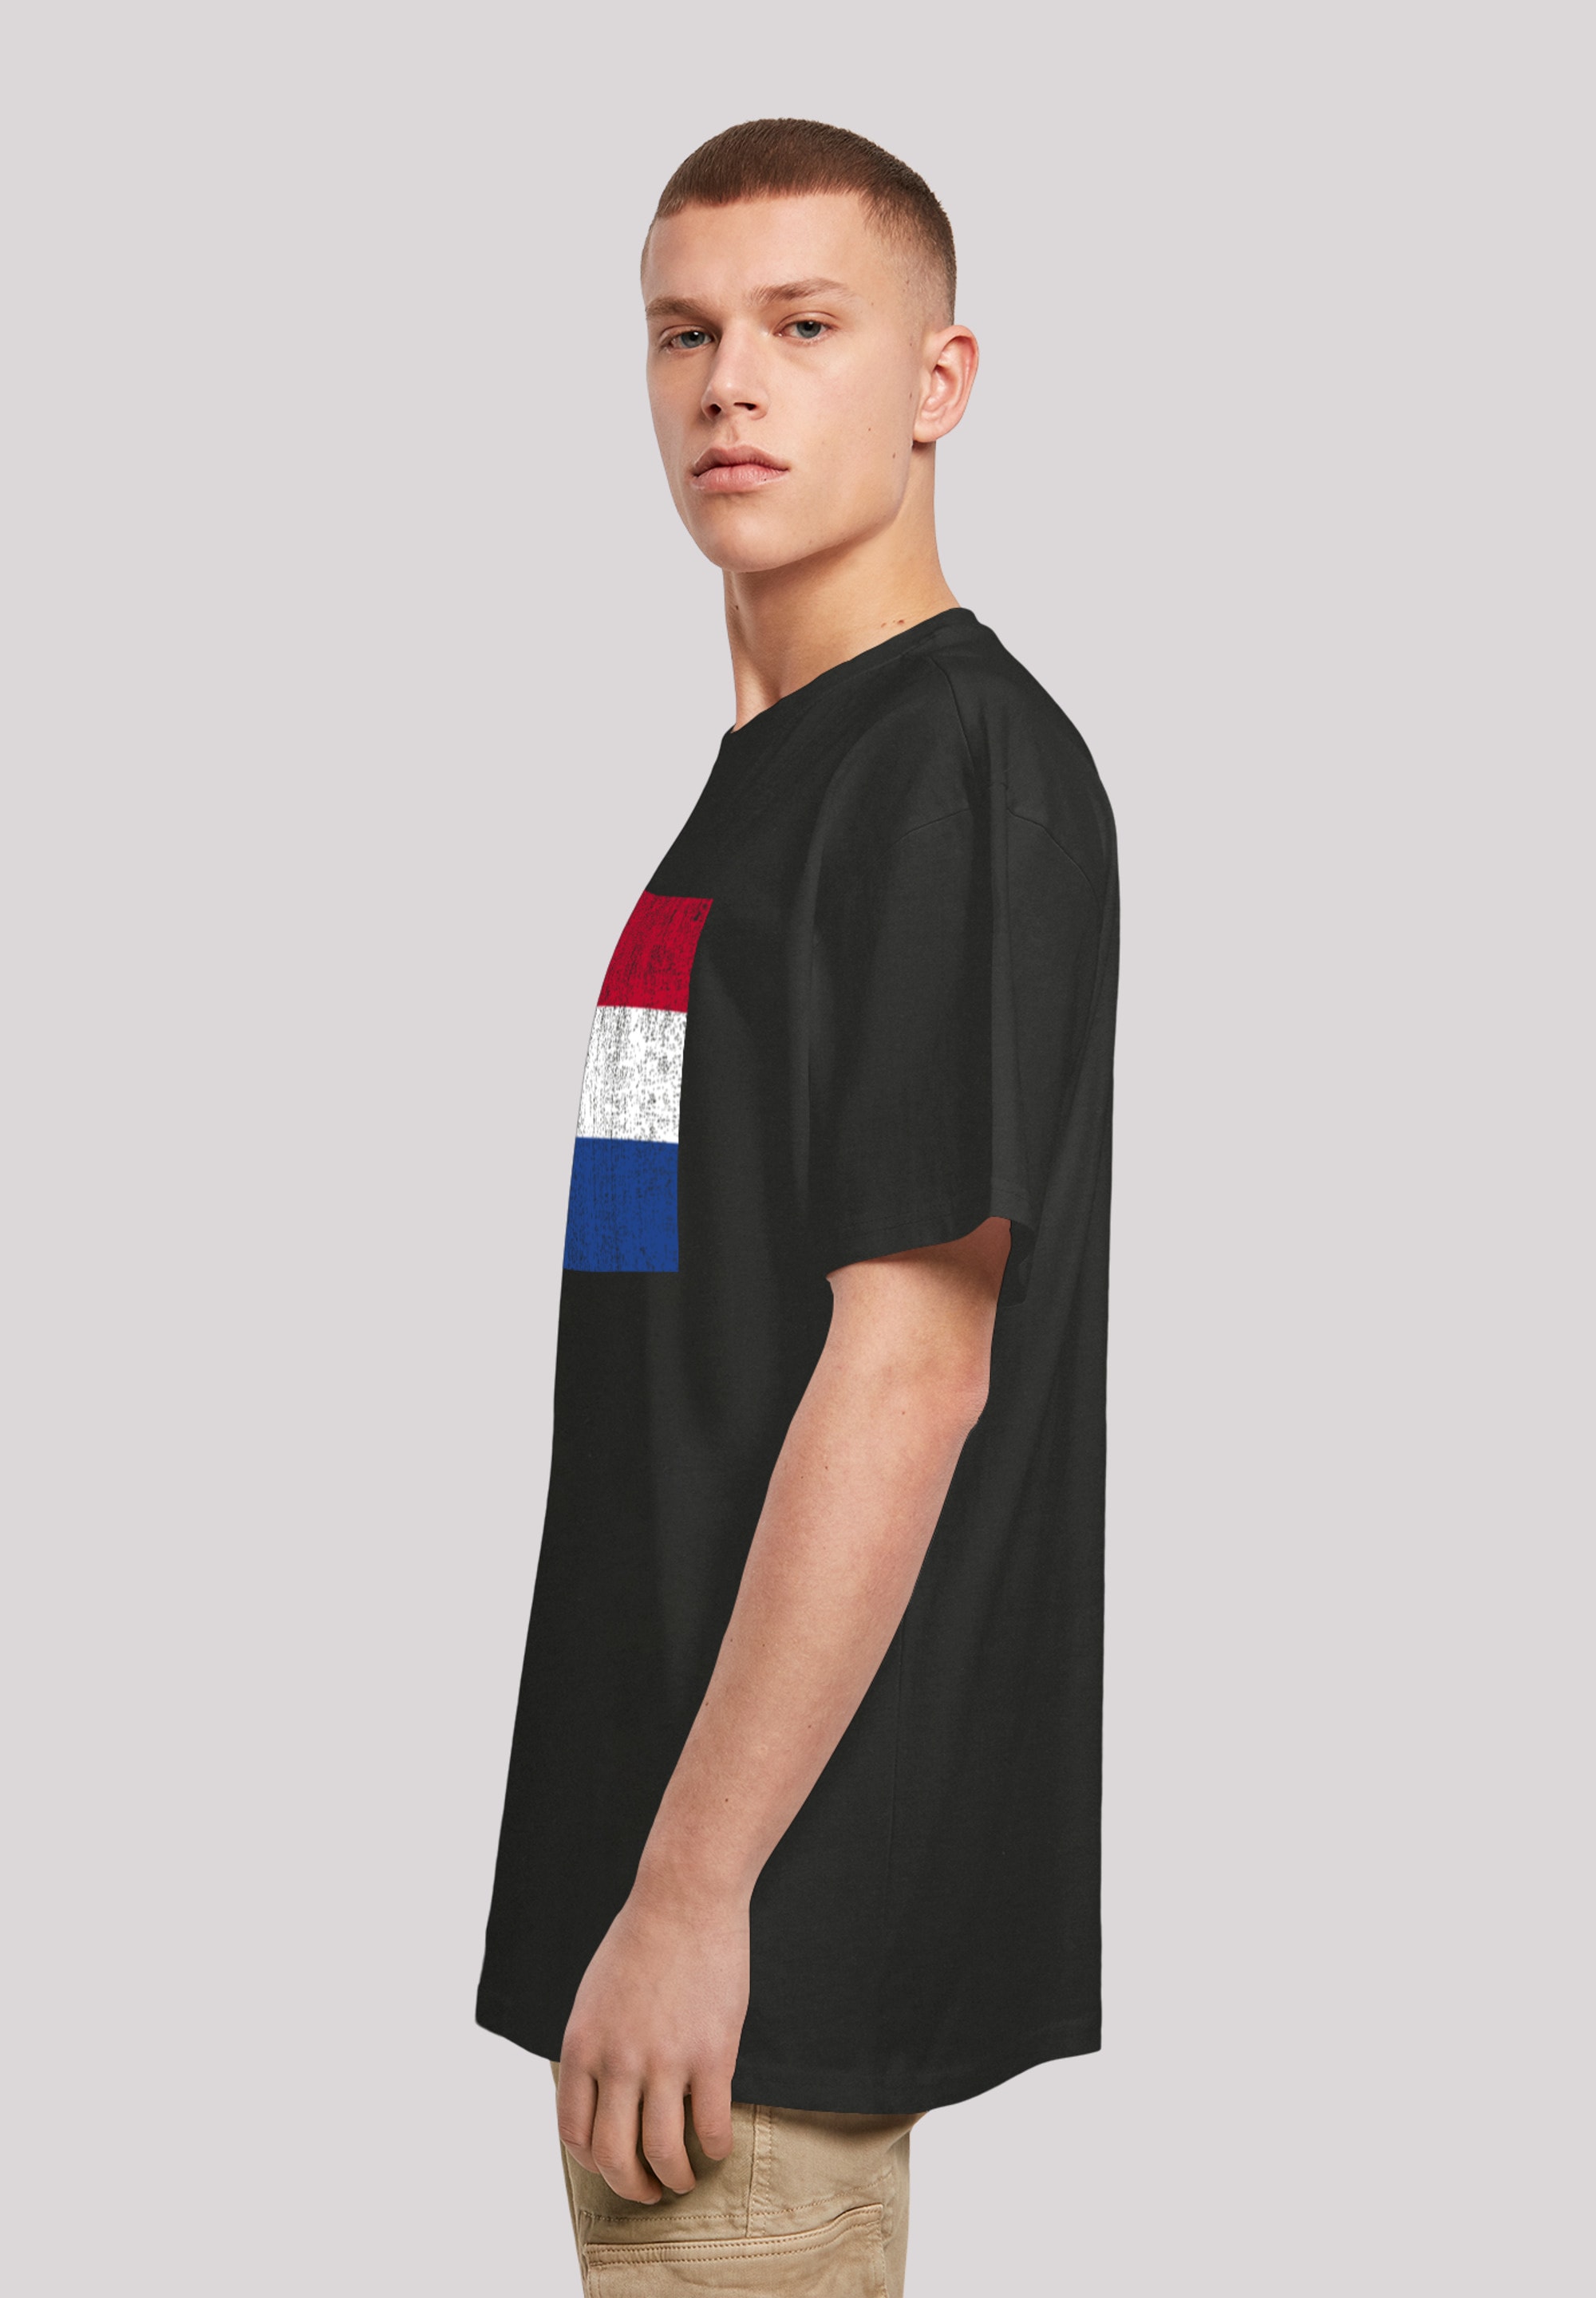 Print BAUR distressed«, | Holland ▷ »Netherlands F4NT4STIC T-Shirt Flagge NIederlande bestellen